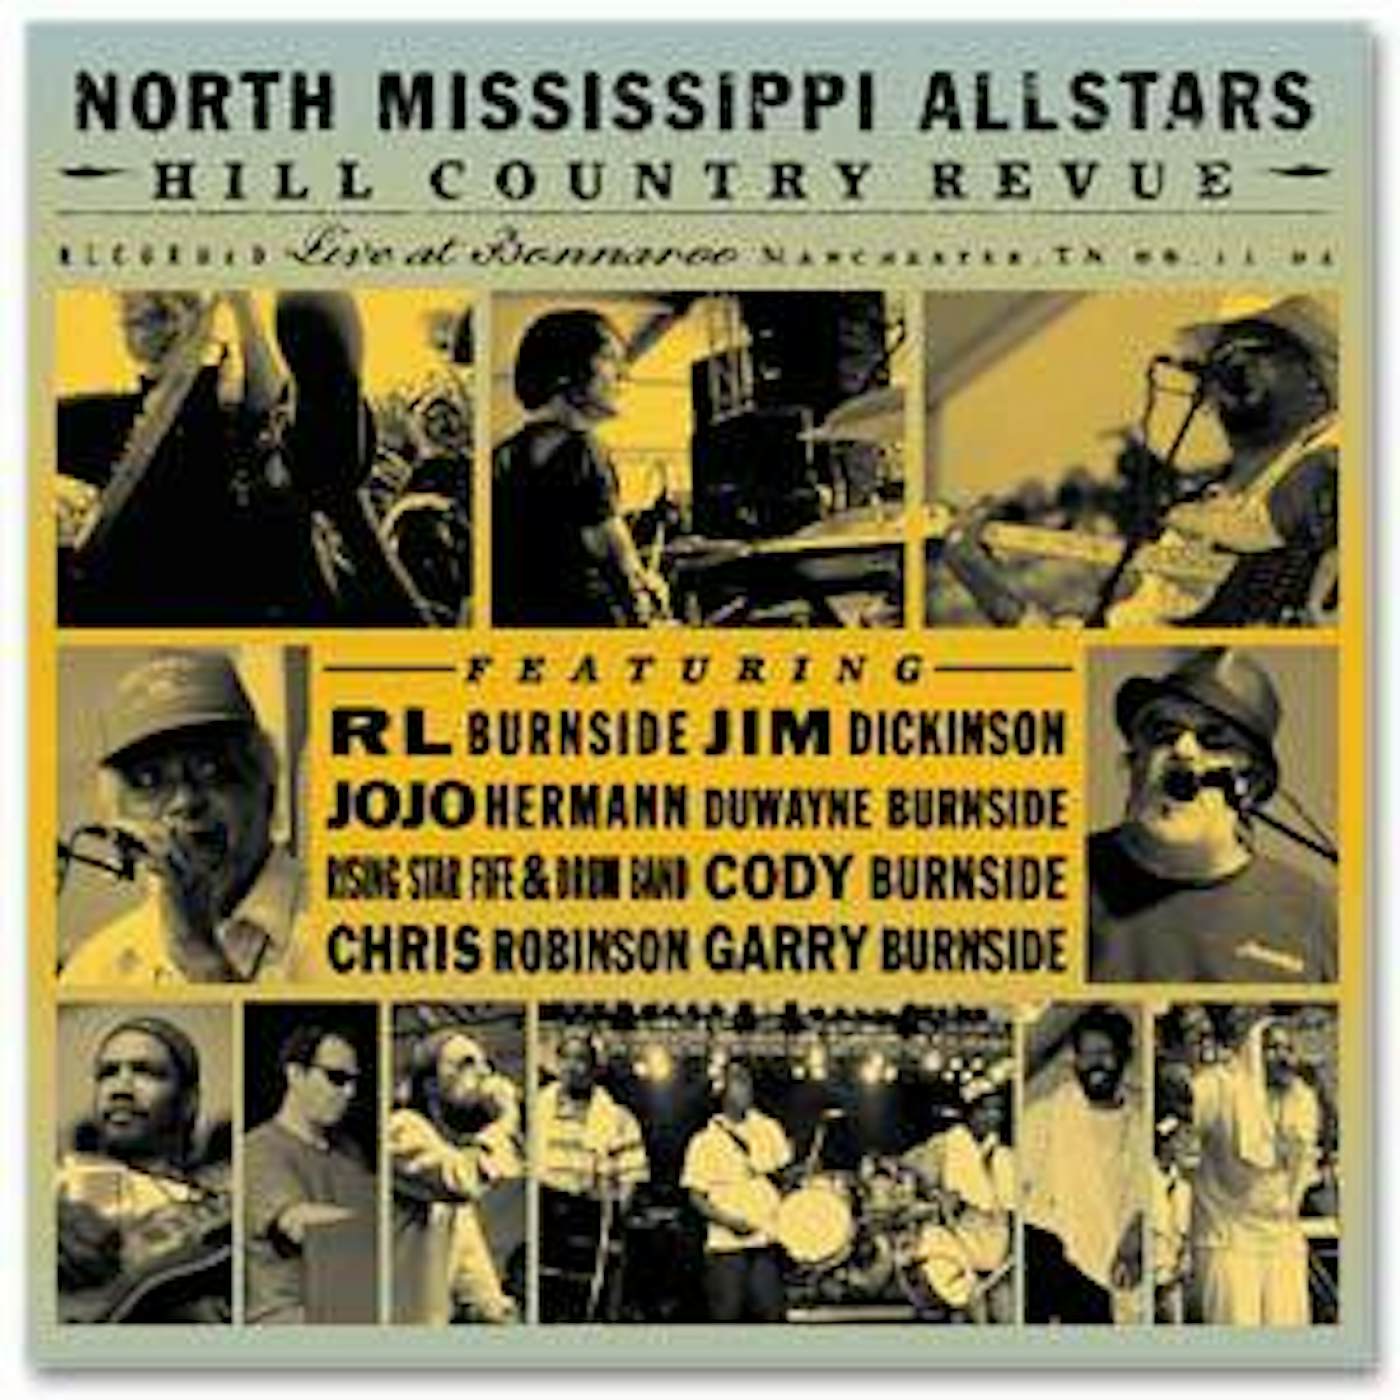 North Mississippi Allstars - Hill Country Revue CD